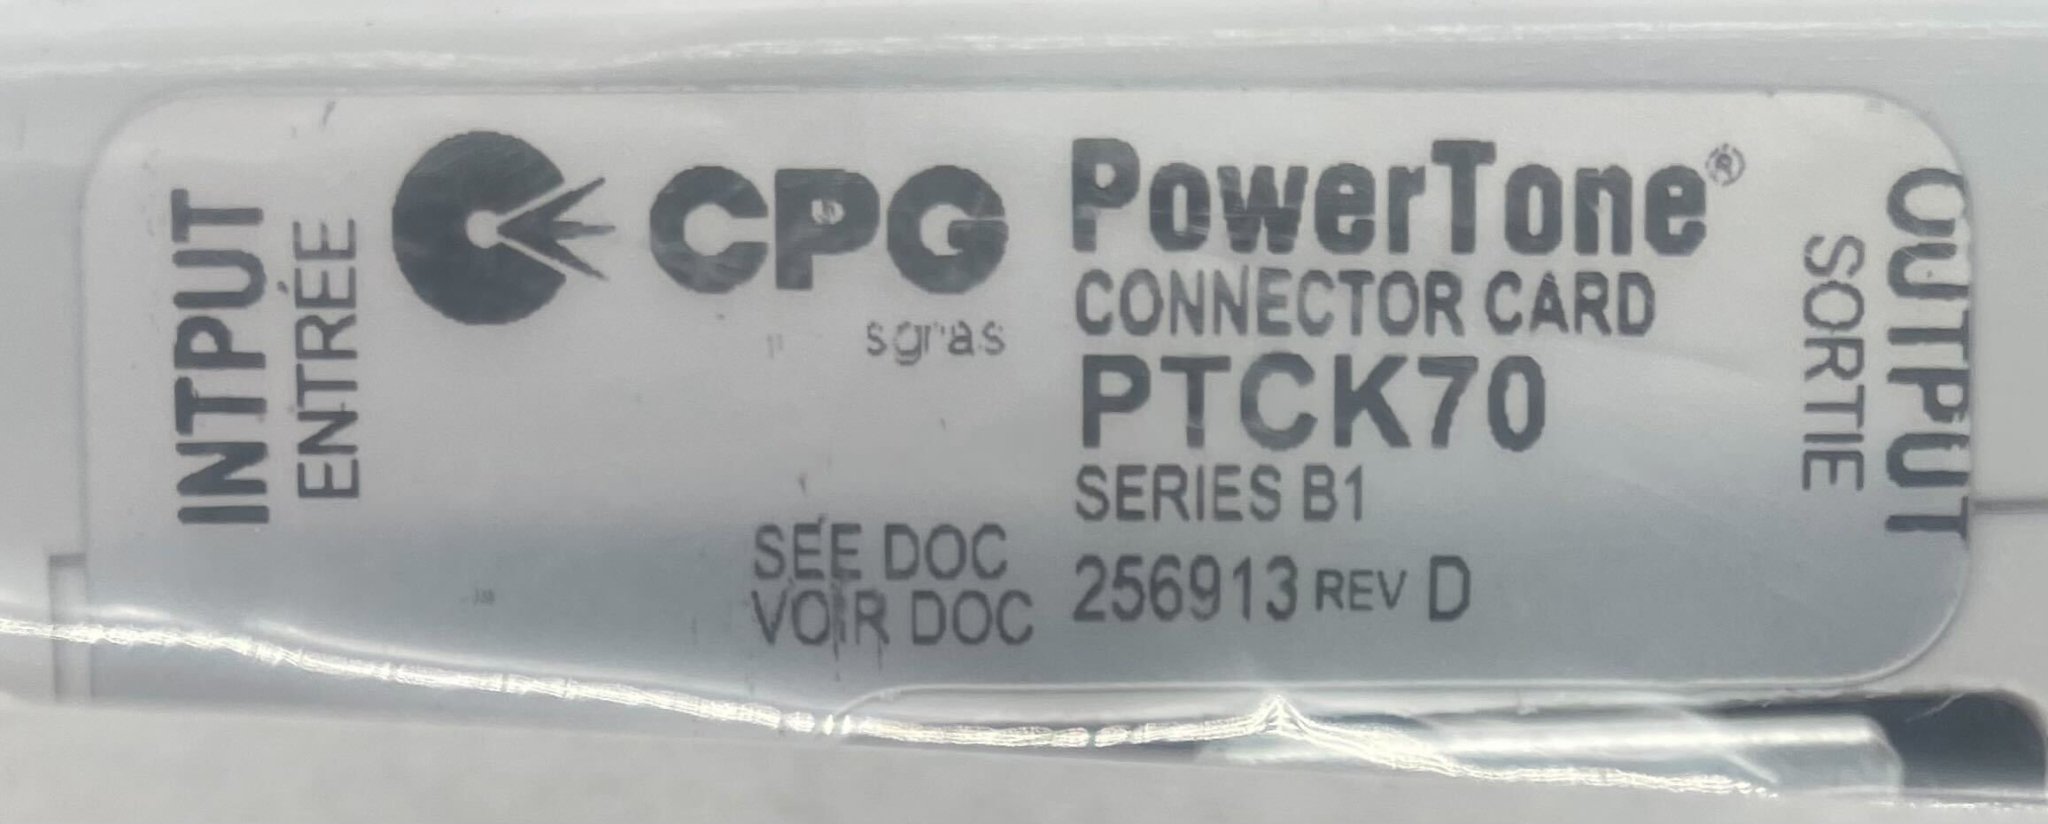 Potter PTCK70 - The Fire Alarm Supplier